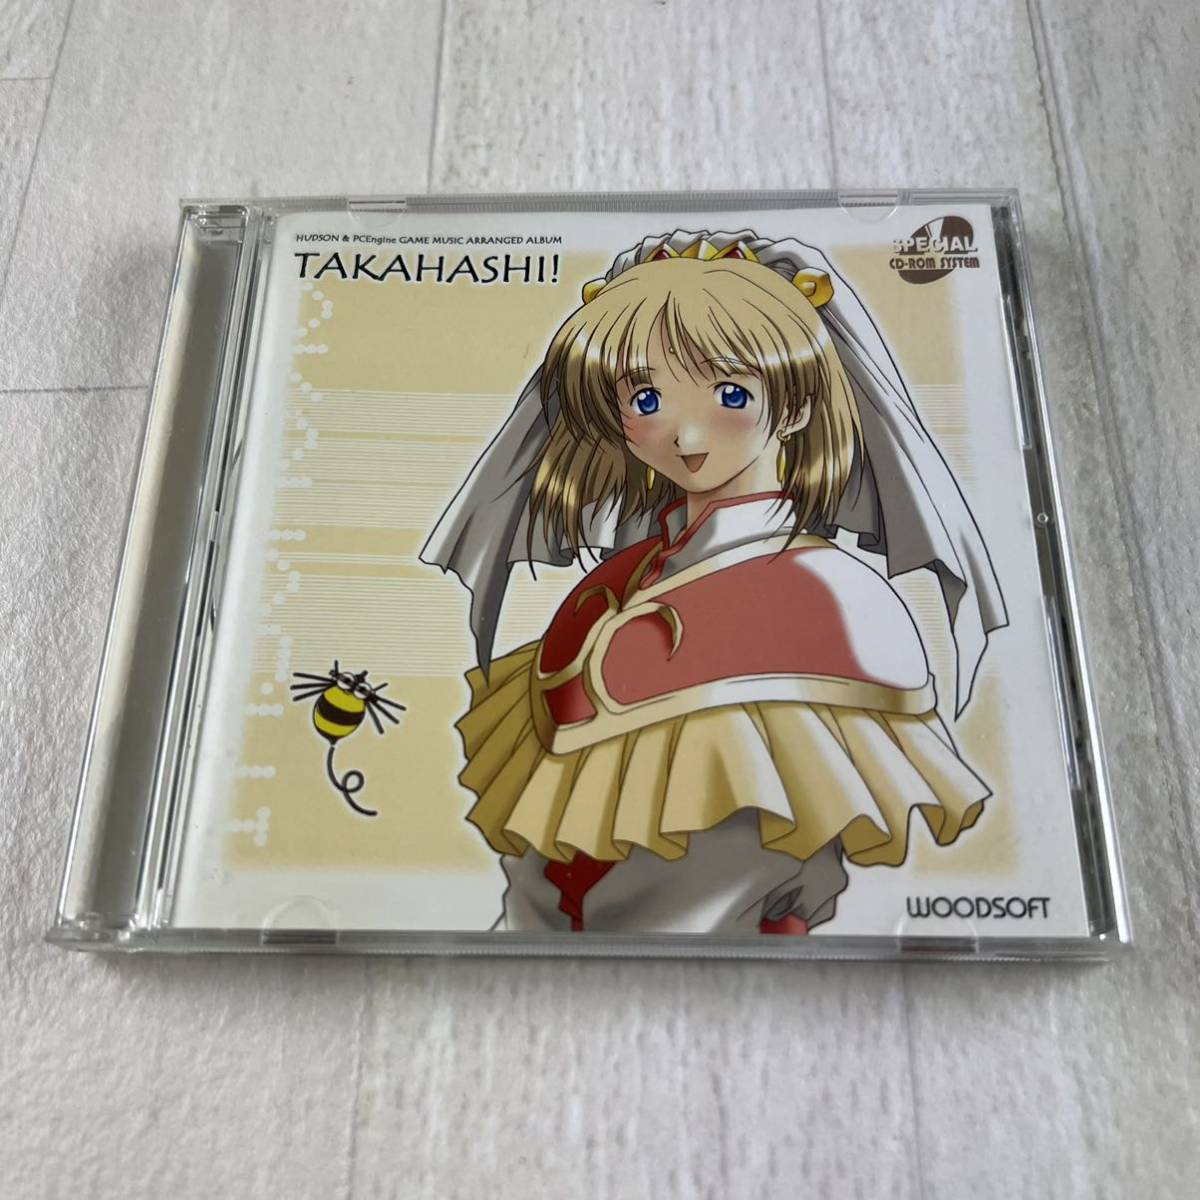 C9 TAKAHASHI! CD HUDSON&PCEngine GAME ARRANGED ALBUM_画像1